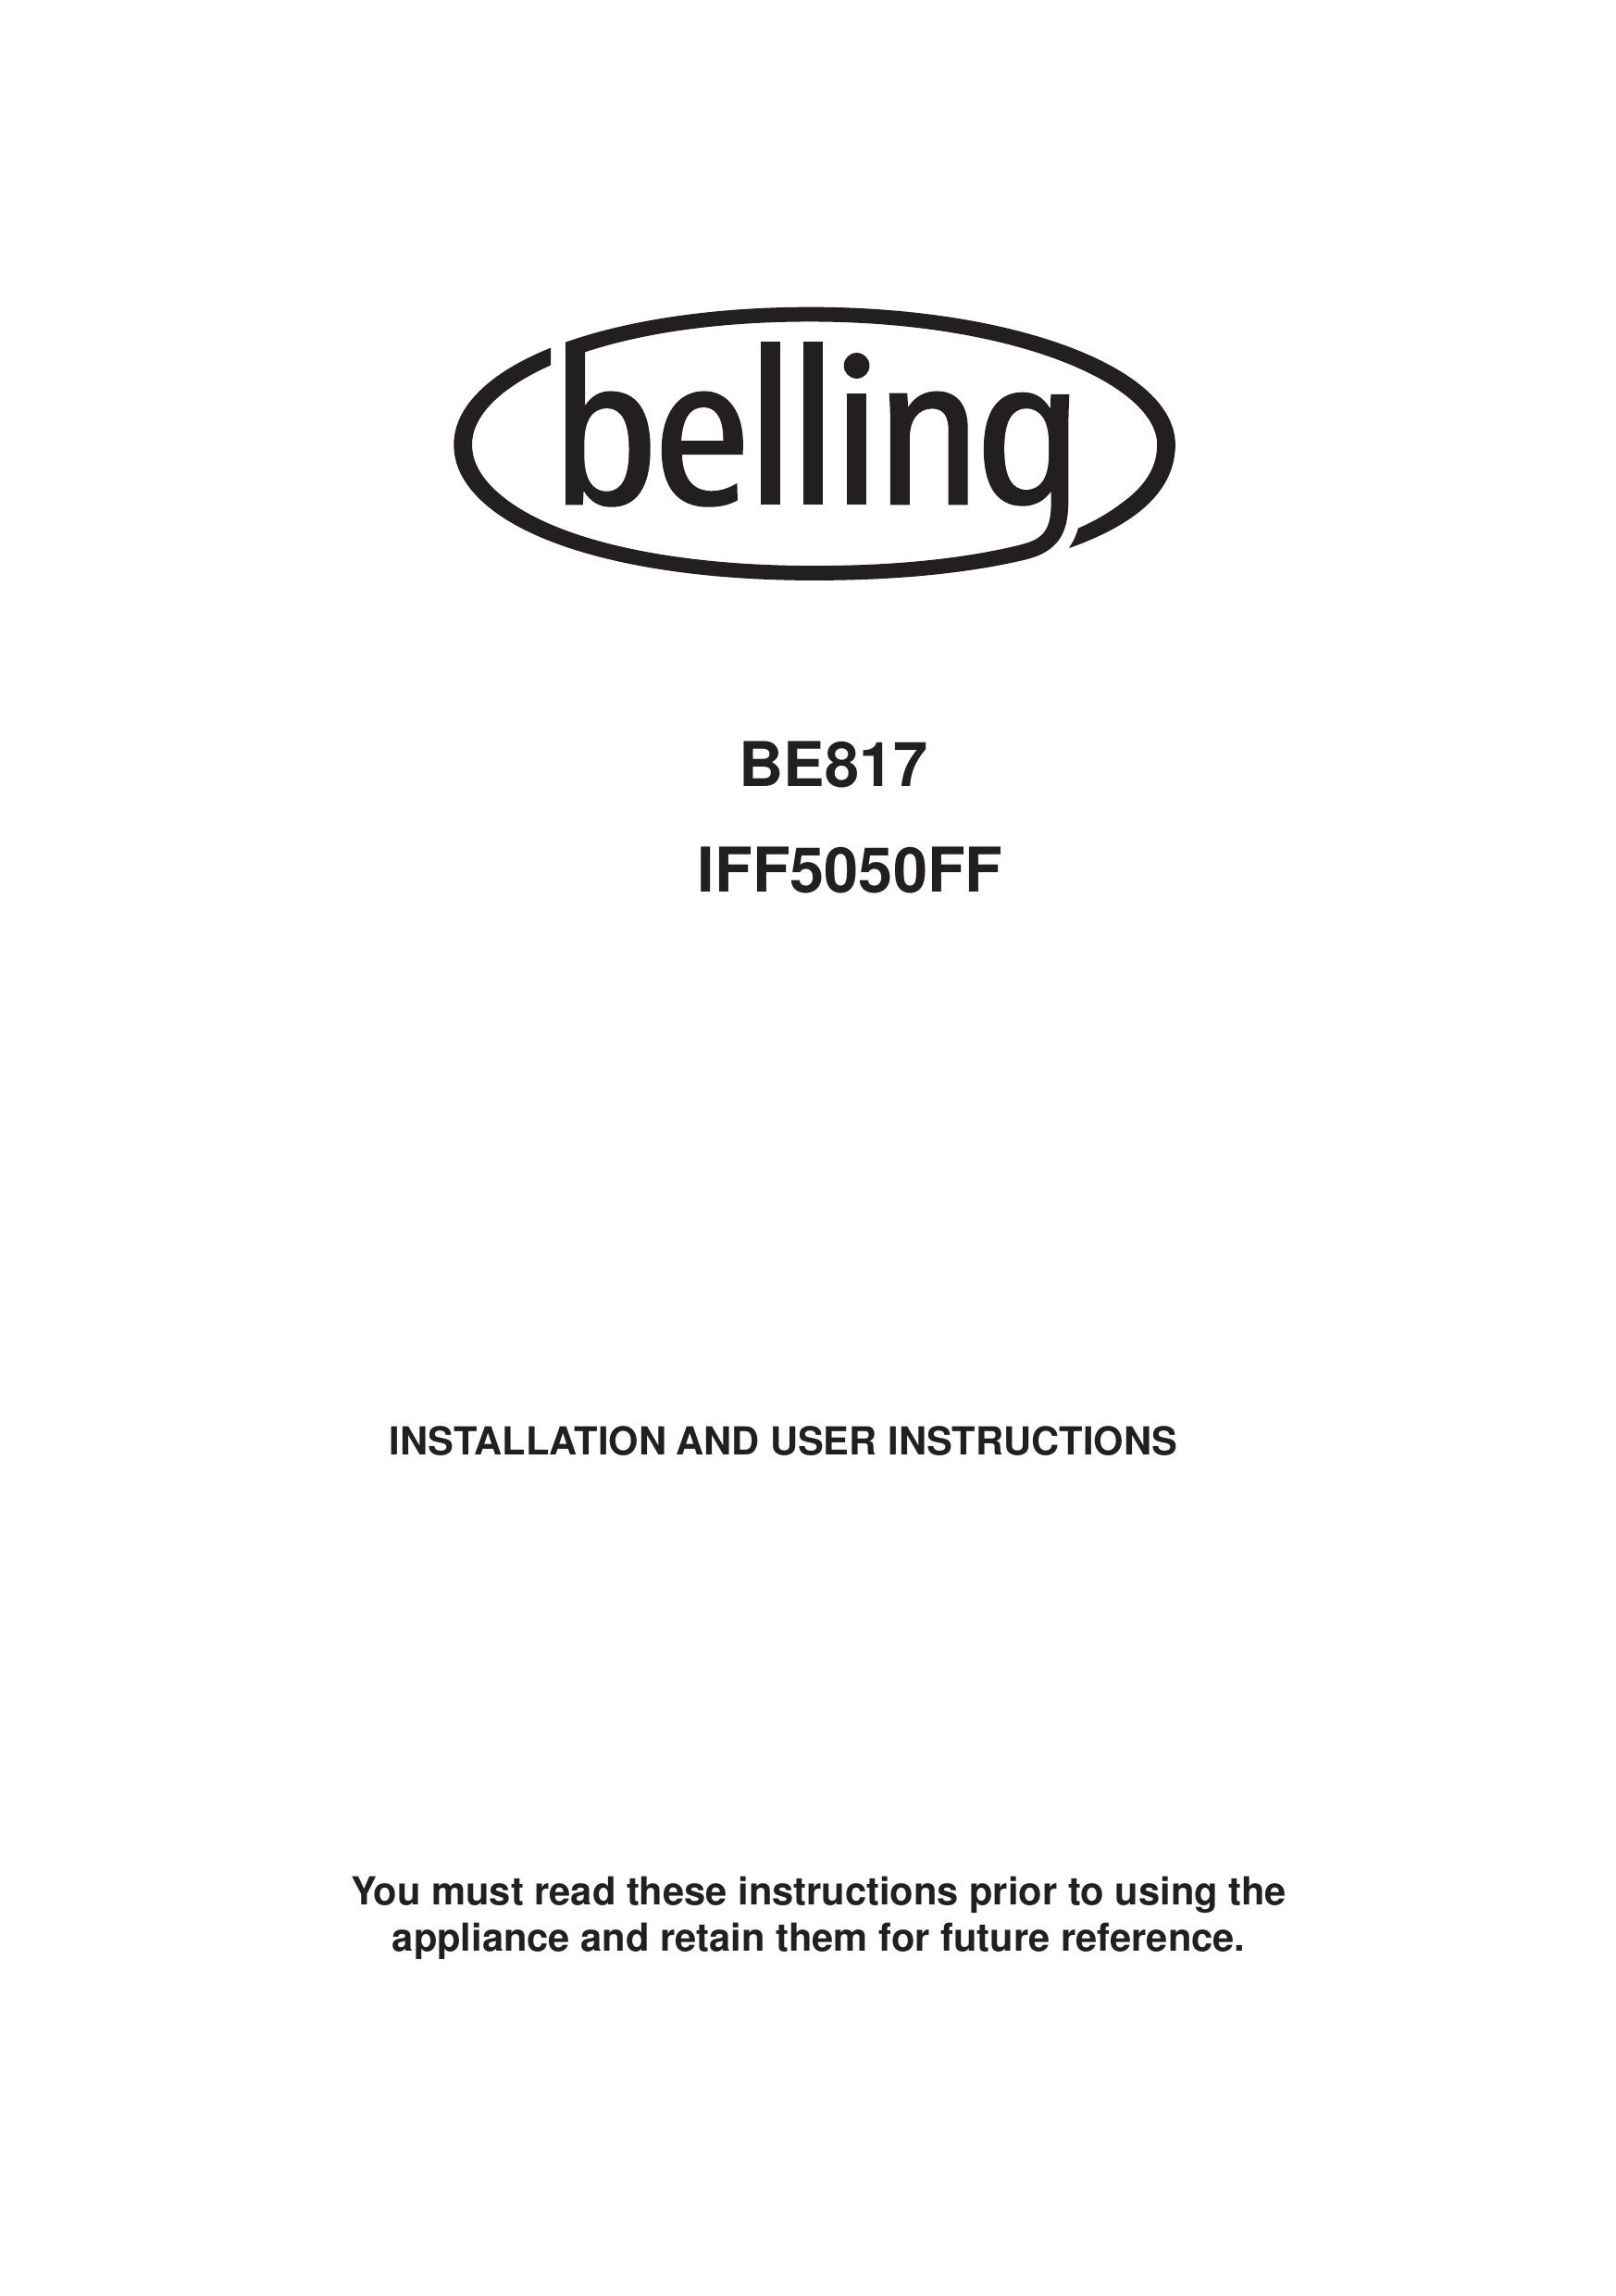 Glen Dimplex Home Appliances Ltd IFF5050FF Refrigerator User Manual